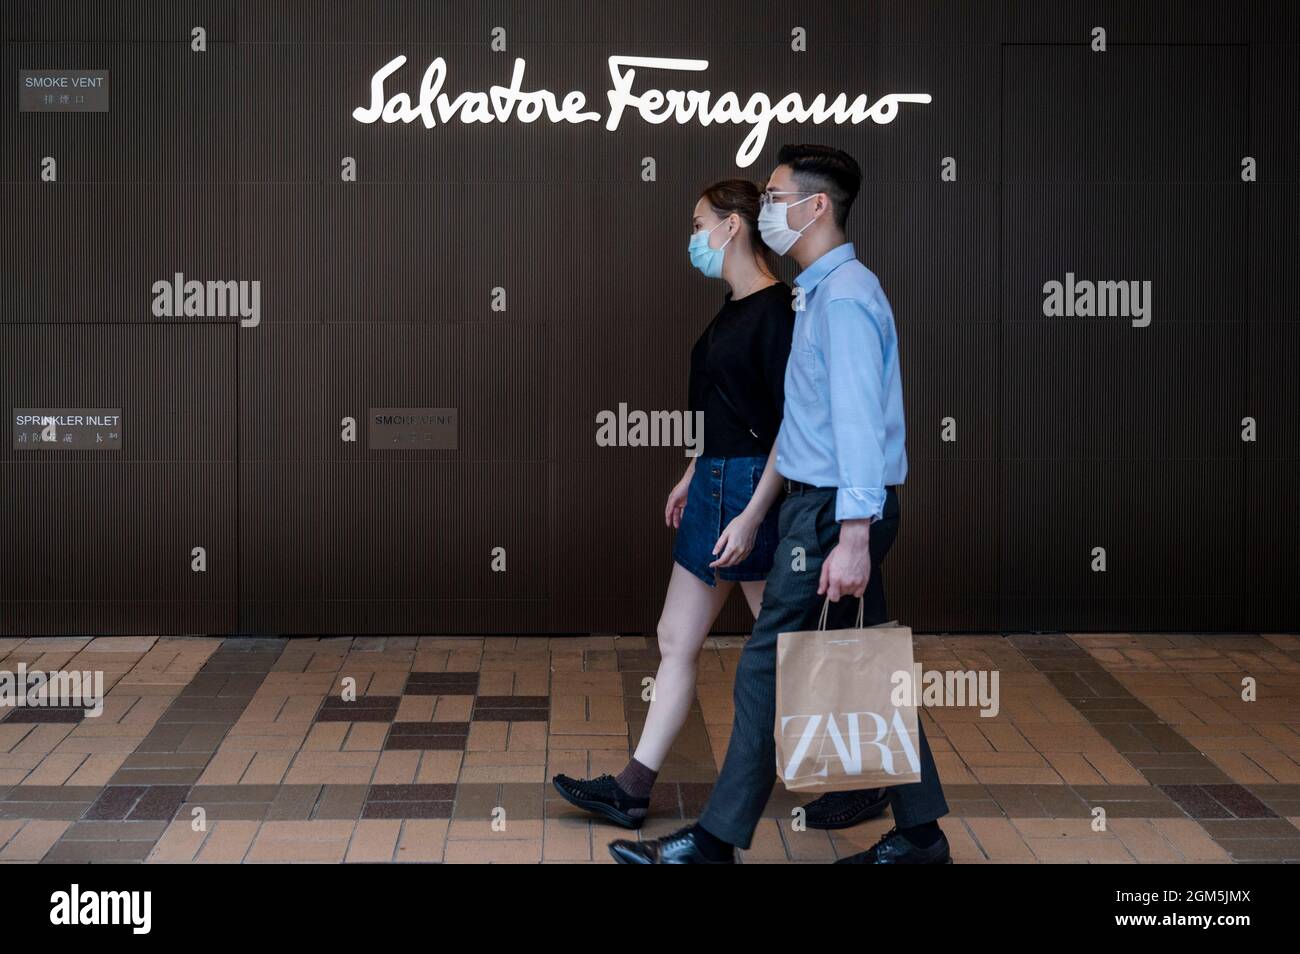 A couple holding a Zara shopping bag walks past the Italian luxury shoe brand Salvatore Ferragamo store and logo in Hong Kong. Stock Photo